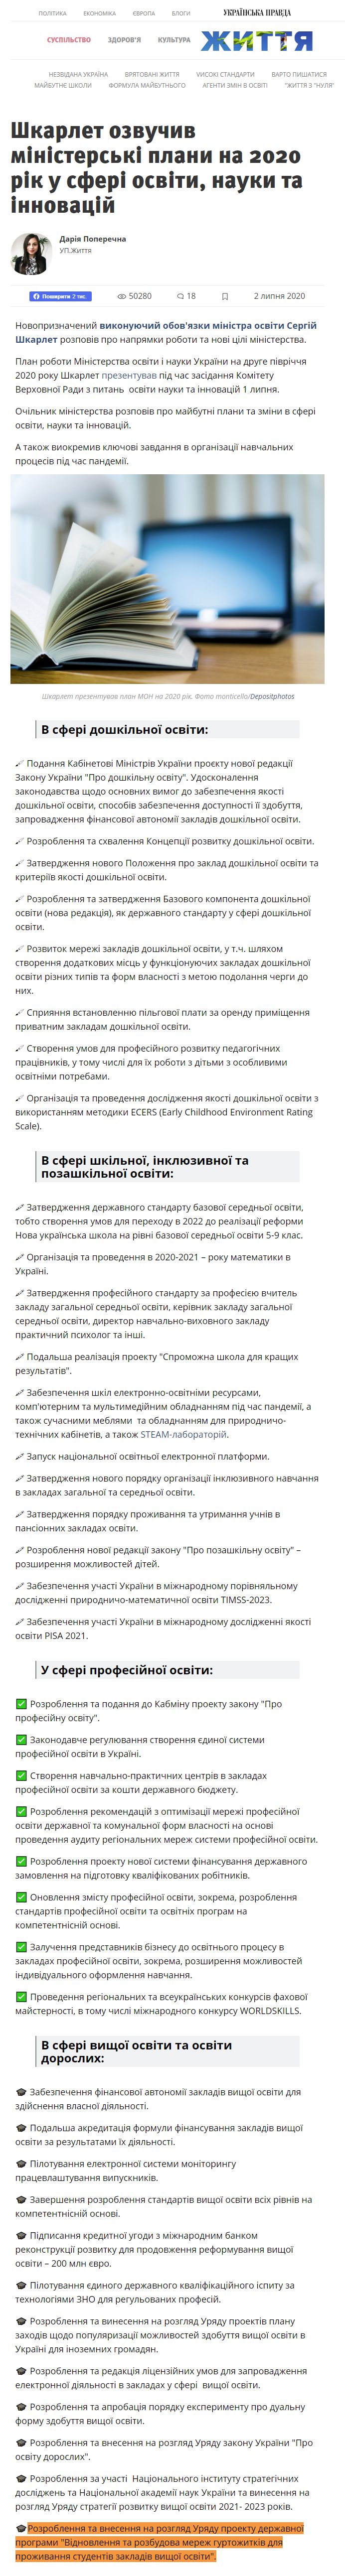 https://life.pravda.com.ua/society/2020/07/2/241527/